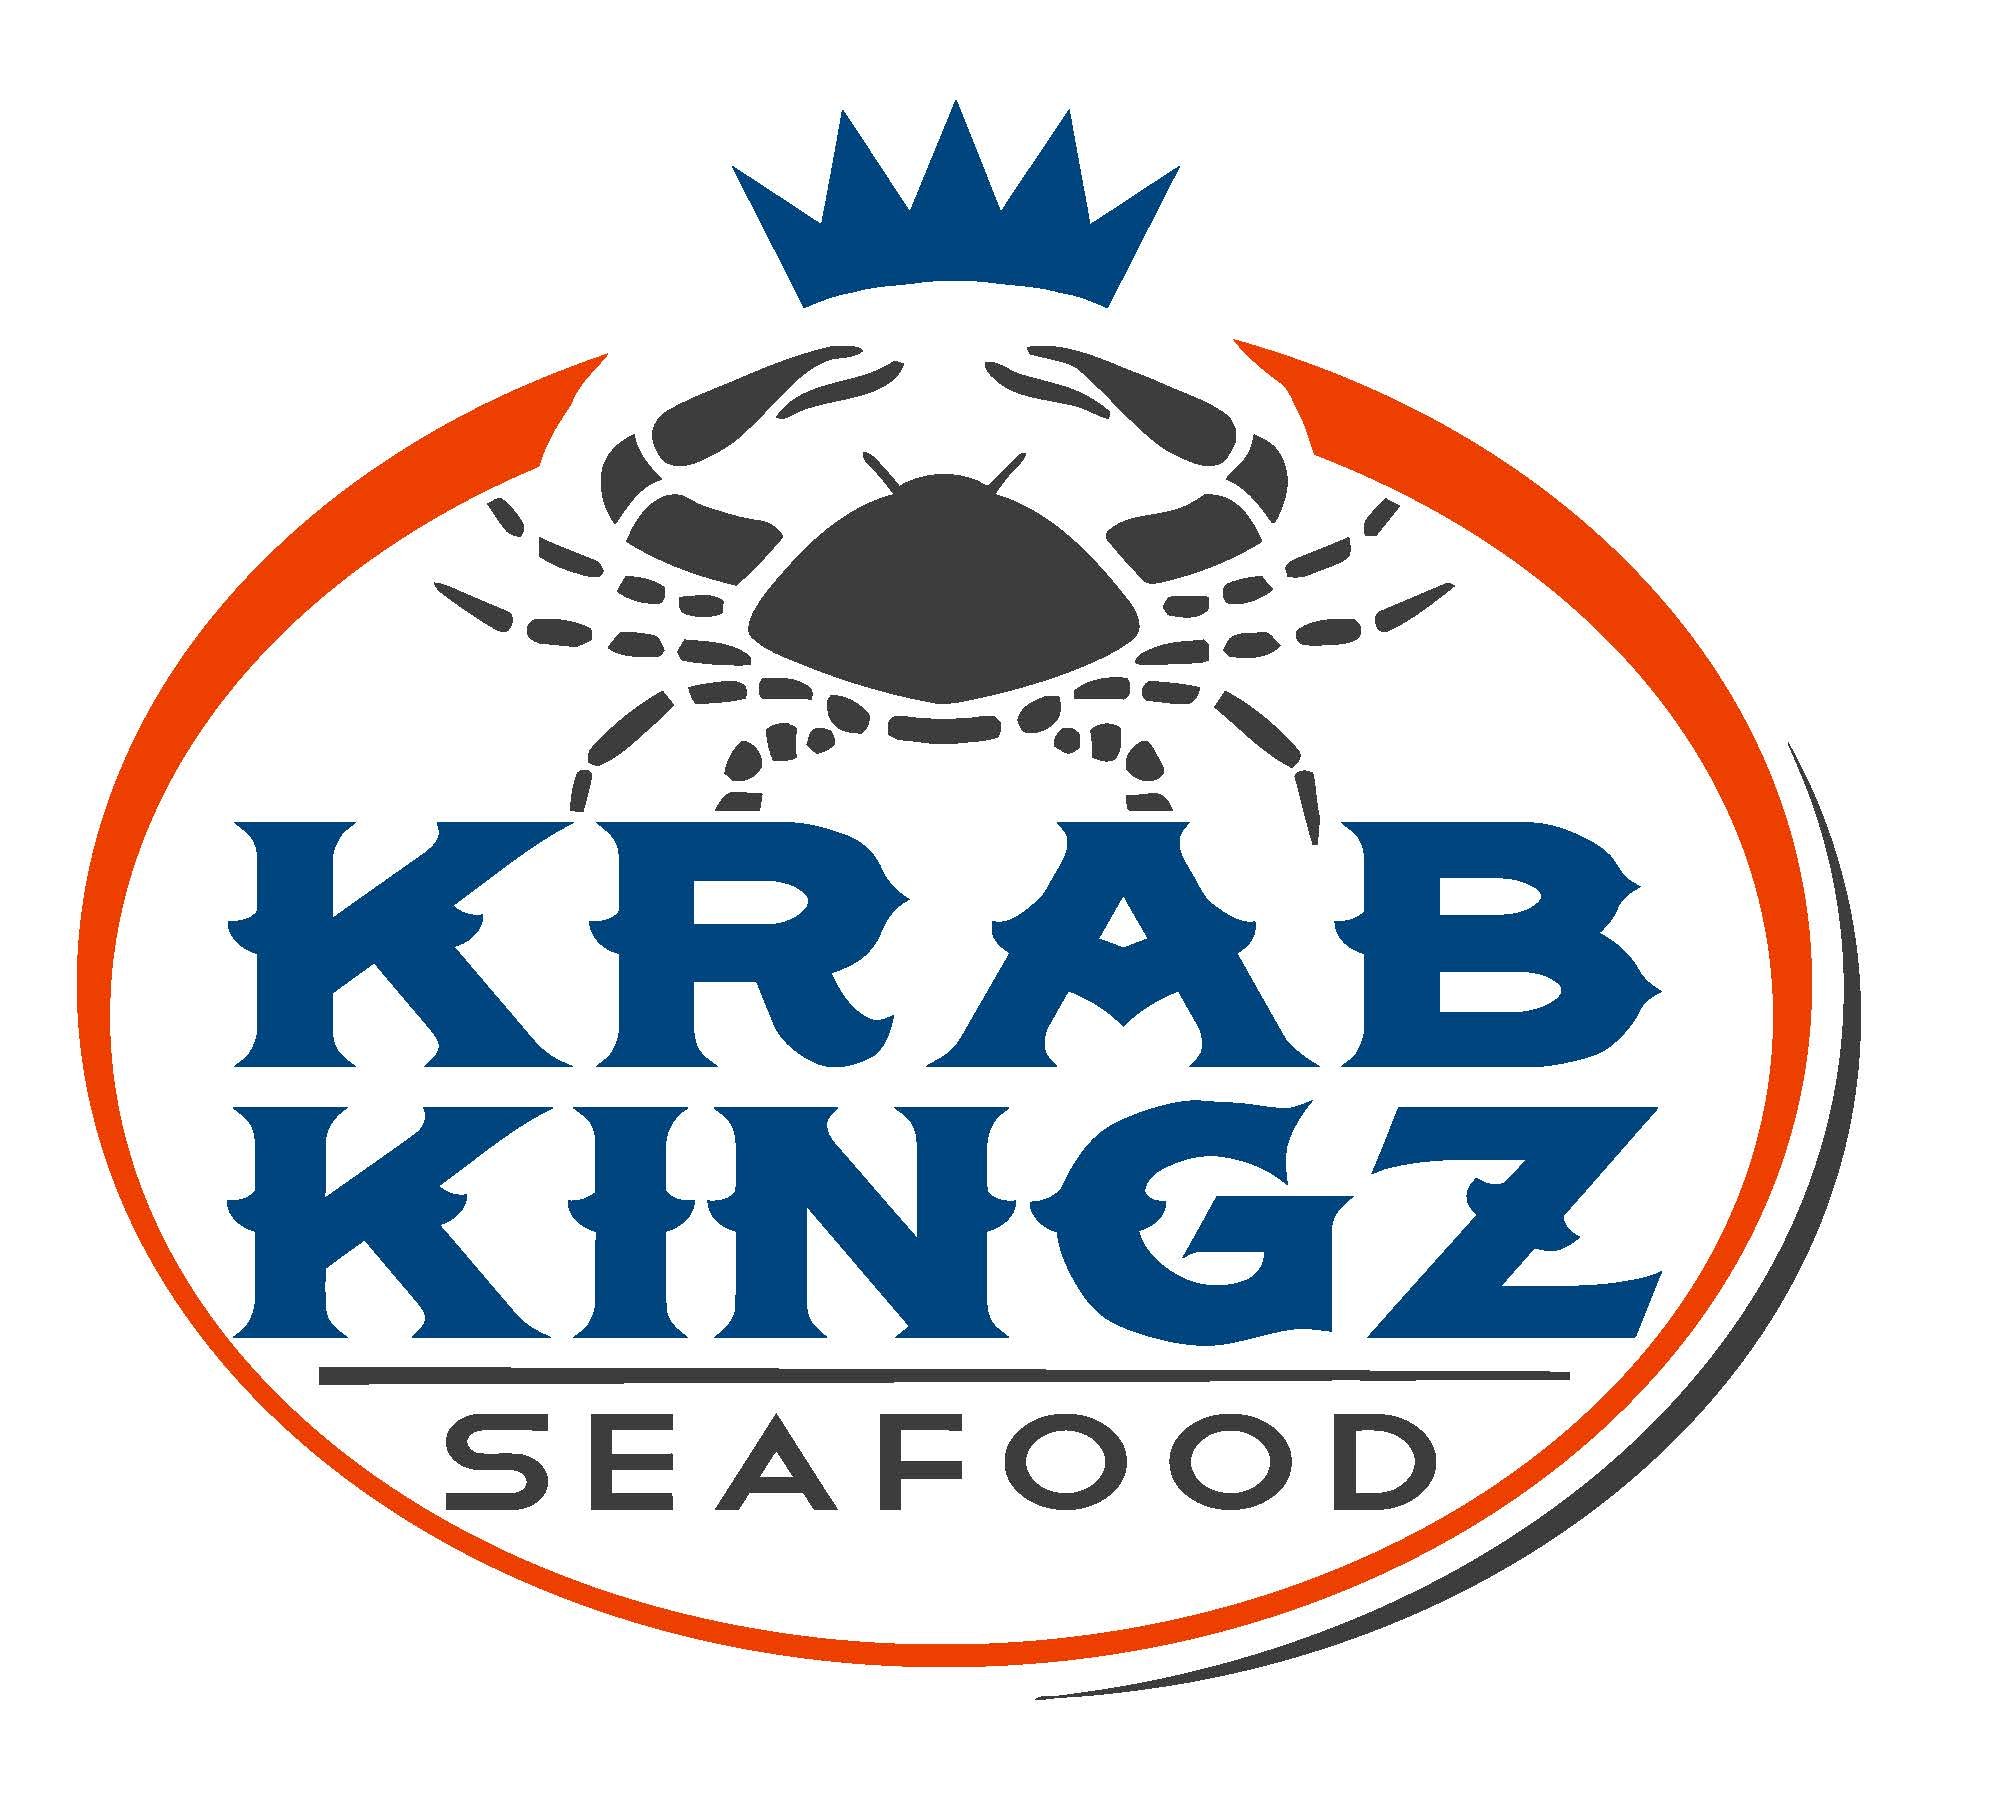 Krab Kingz Logo.jpg